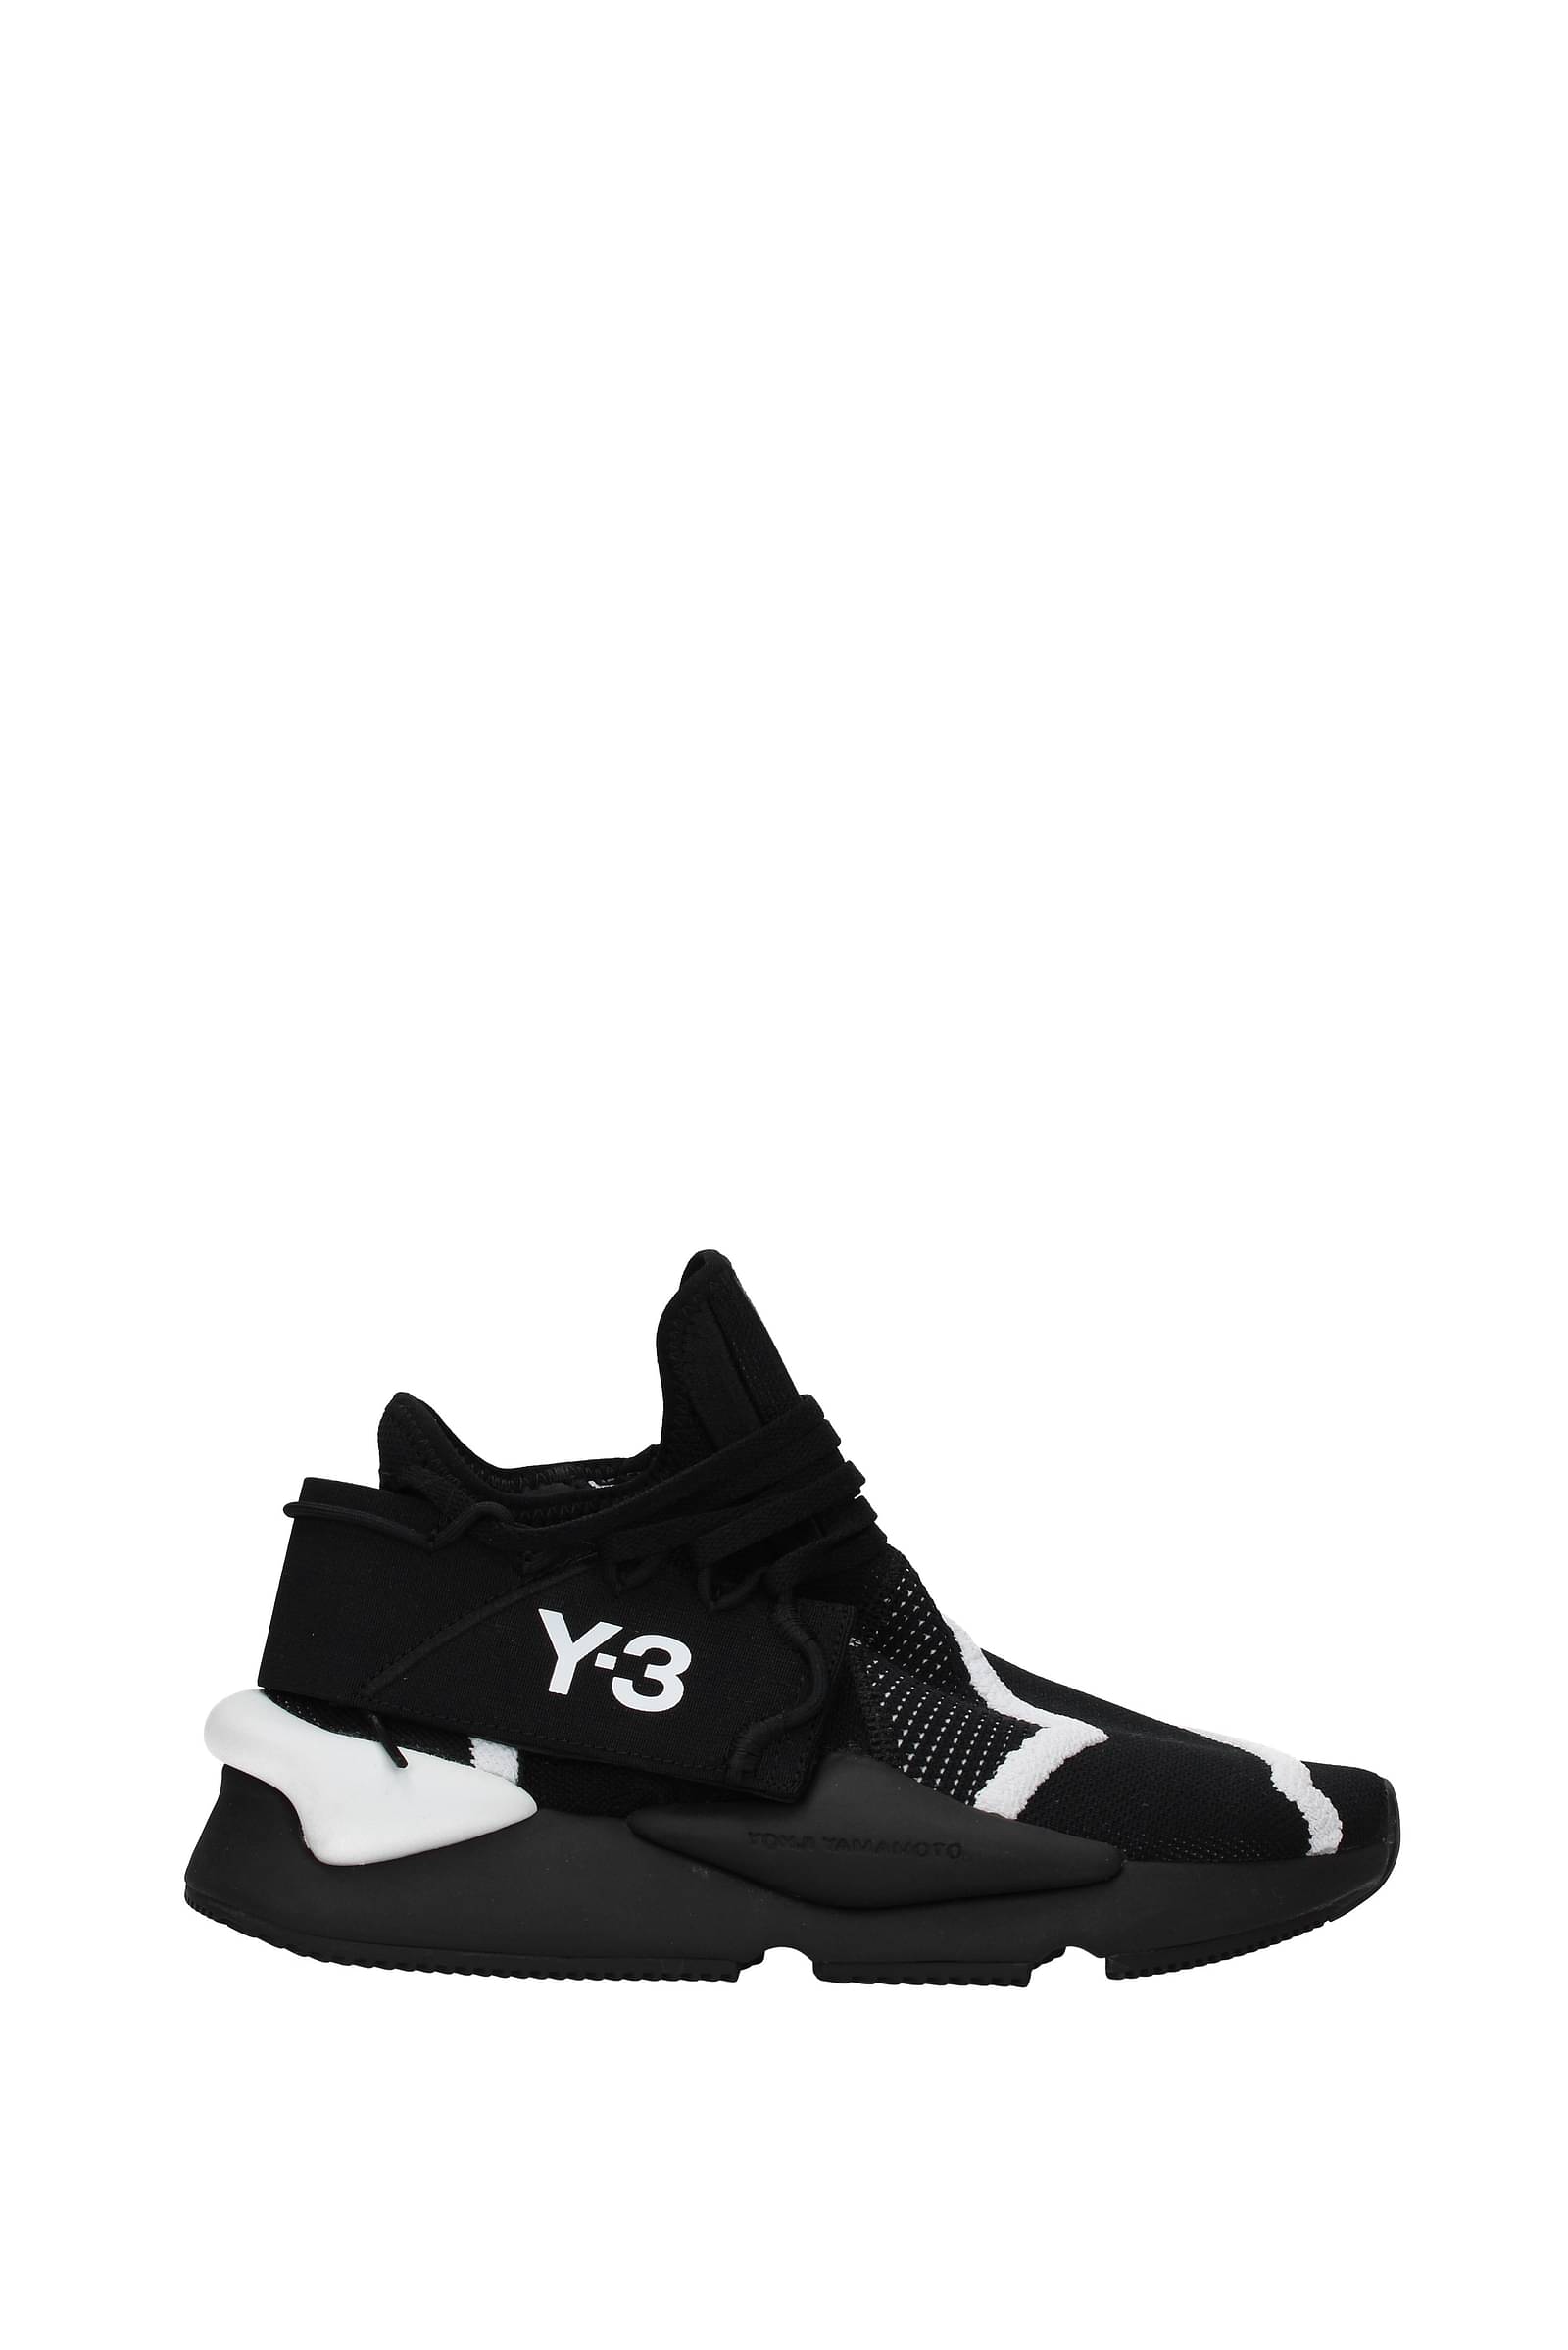 y3 sneakers price